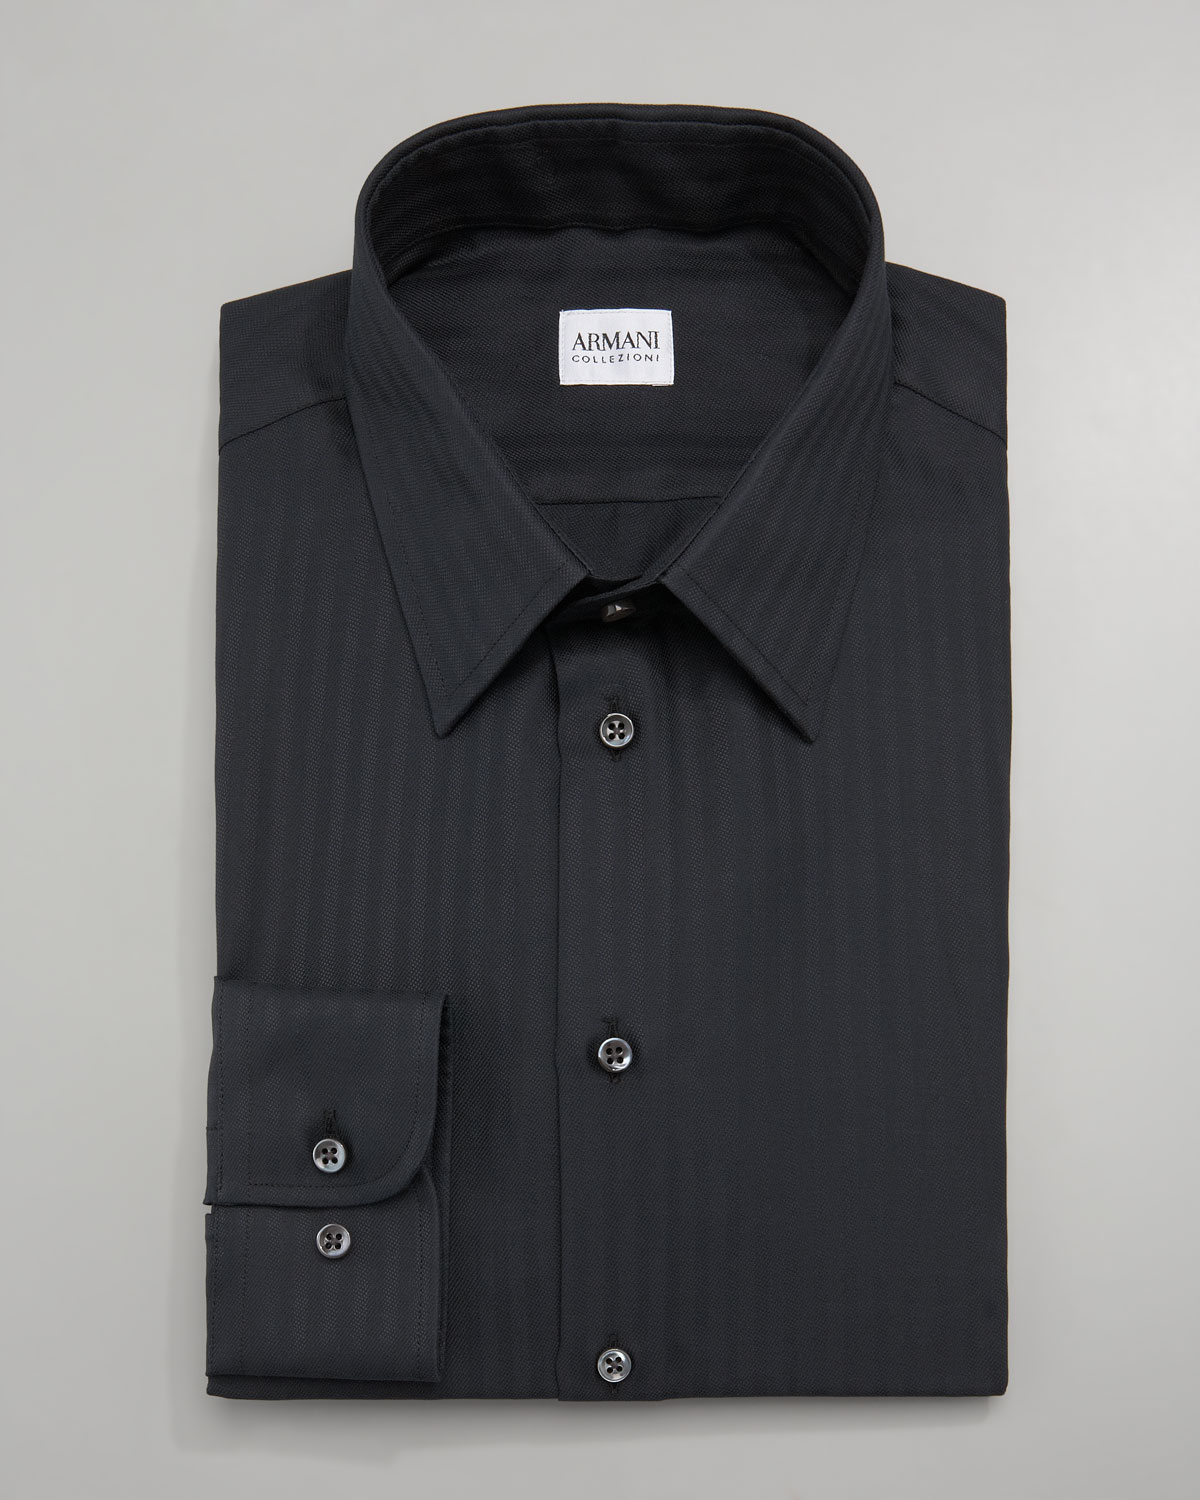 Lyst - Giorgio Armani Tonalstripe Dress Shirt in Black for Men